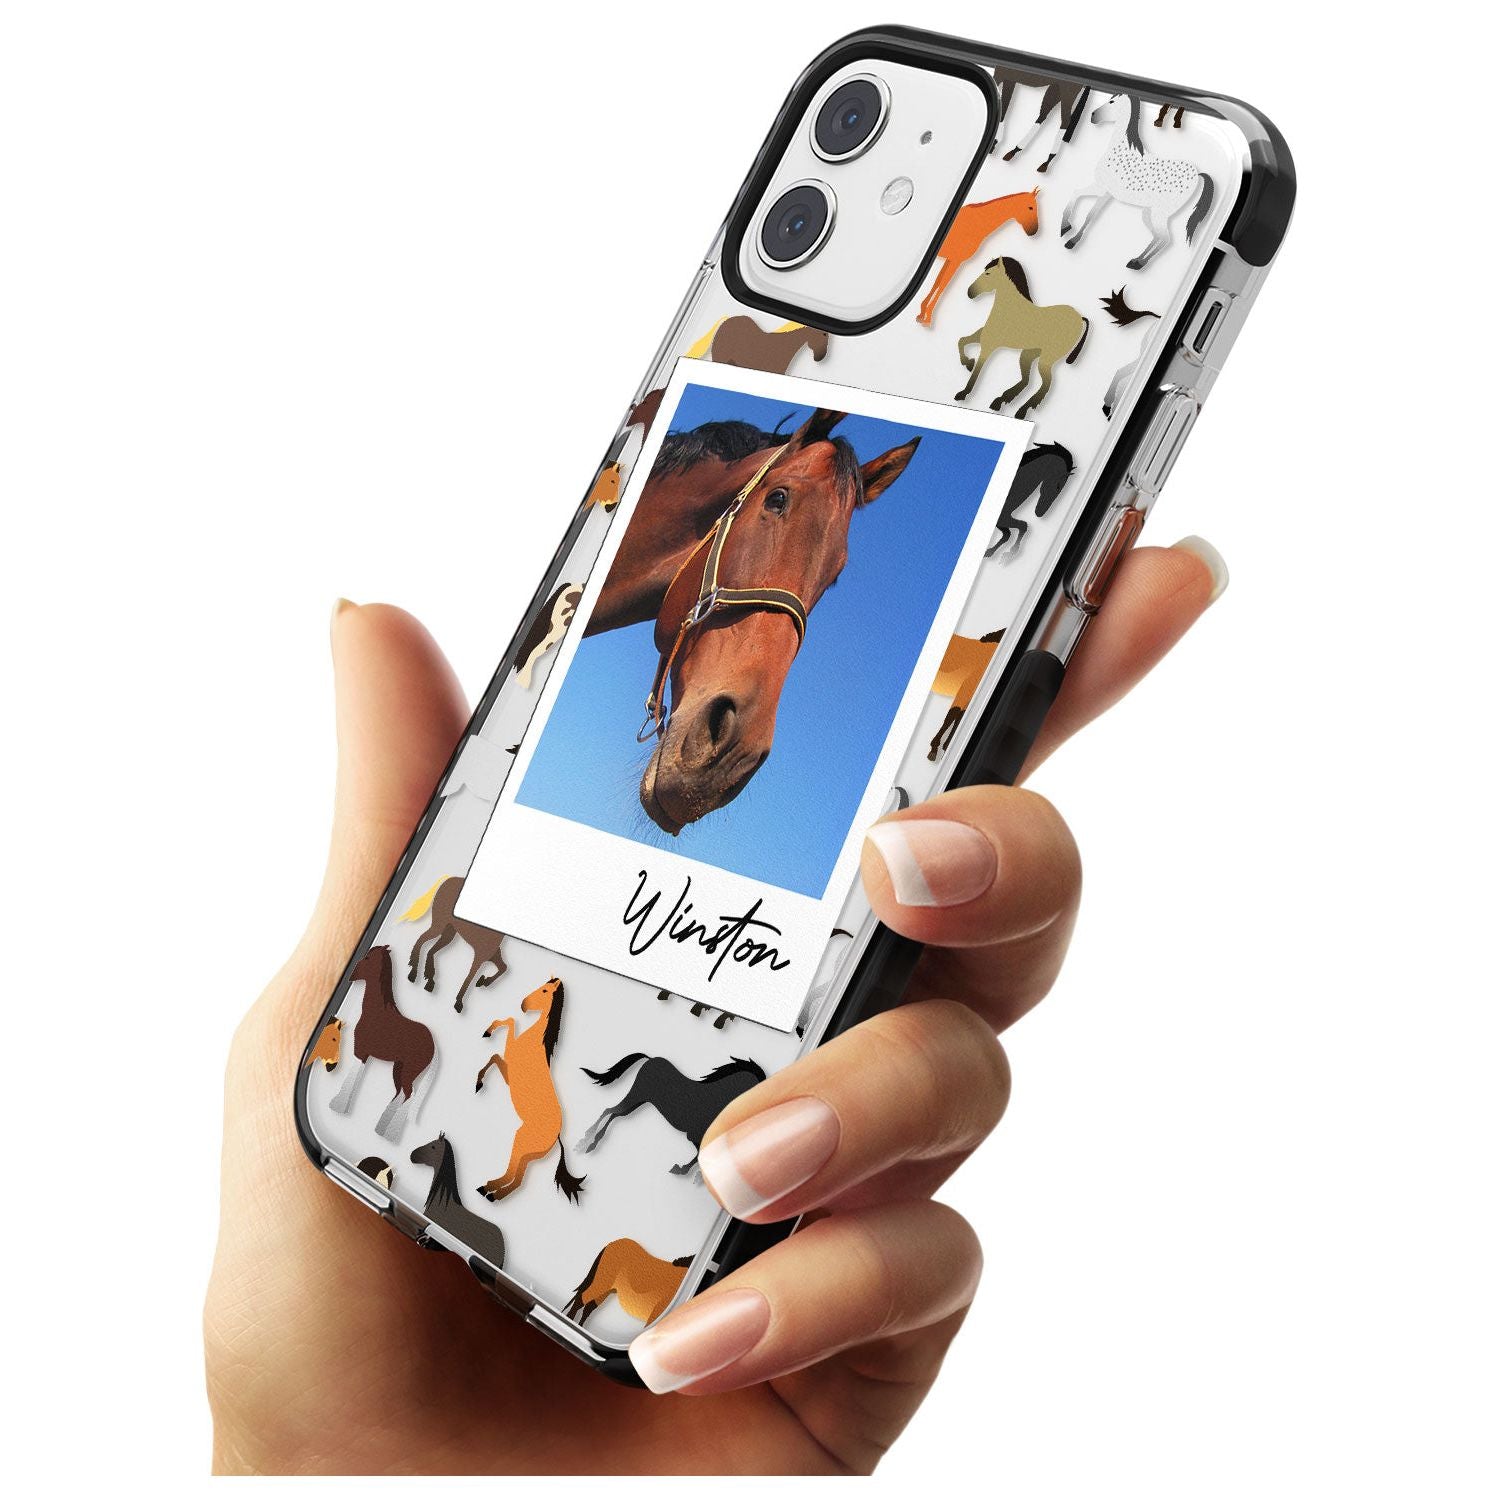 Personalised Horse Polaroid Black Impact Phone Case for iPhone 11 Pro Max